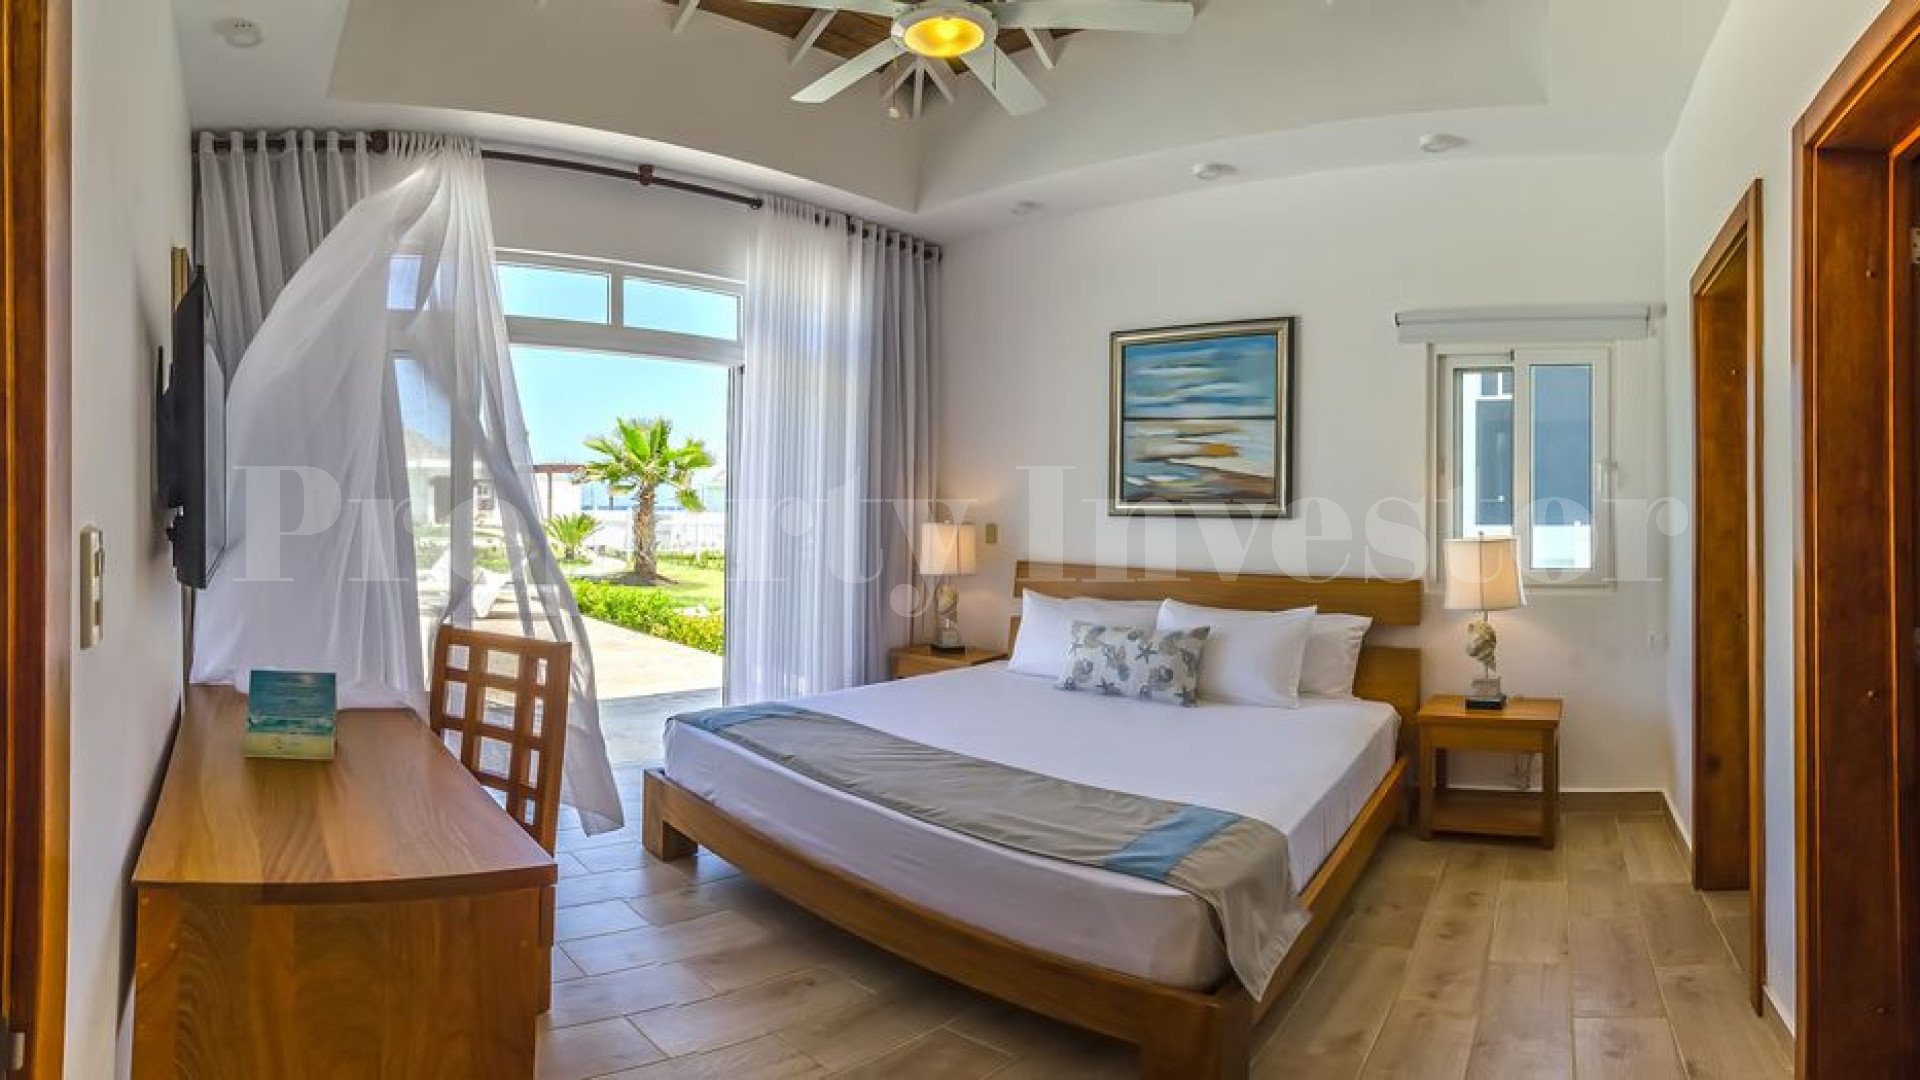 3 Bedroom Oceanview Villa in the Dominican Republic with 30 Year Financing (Villa 14)